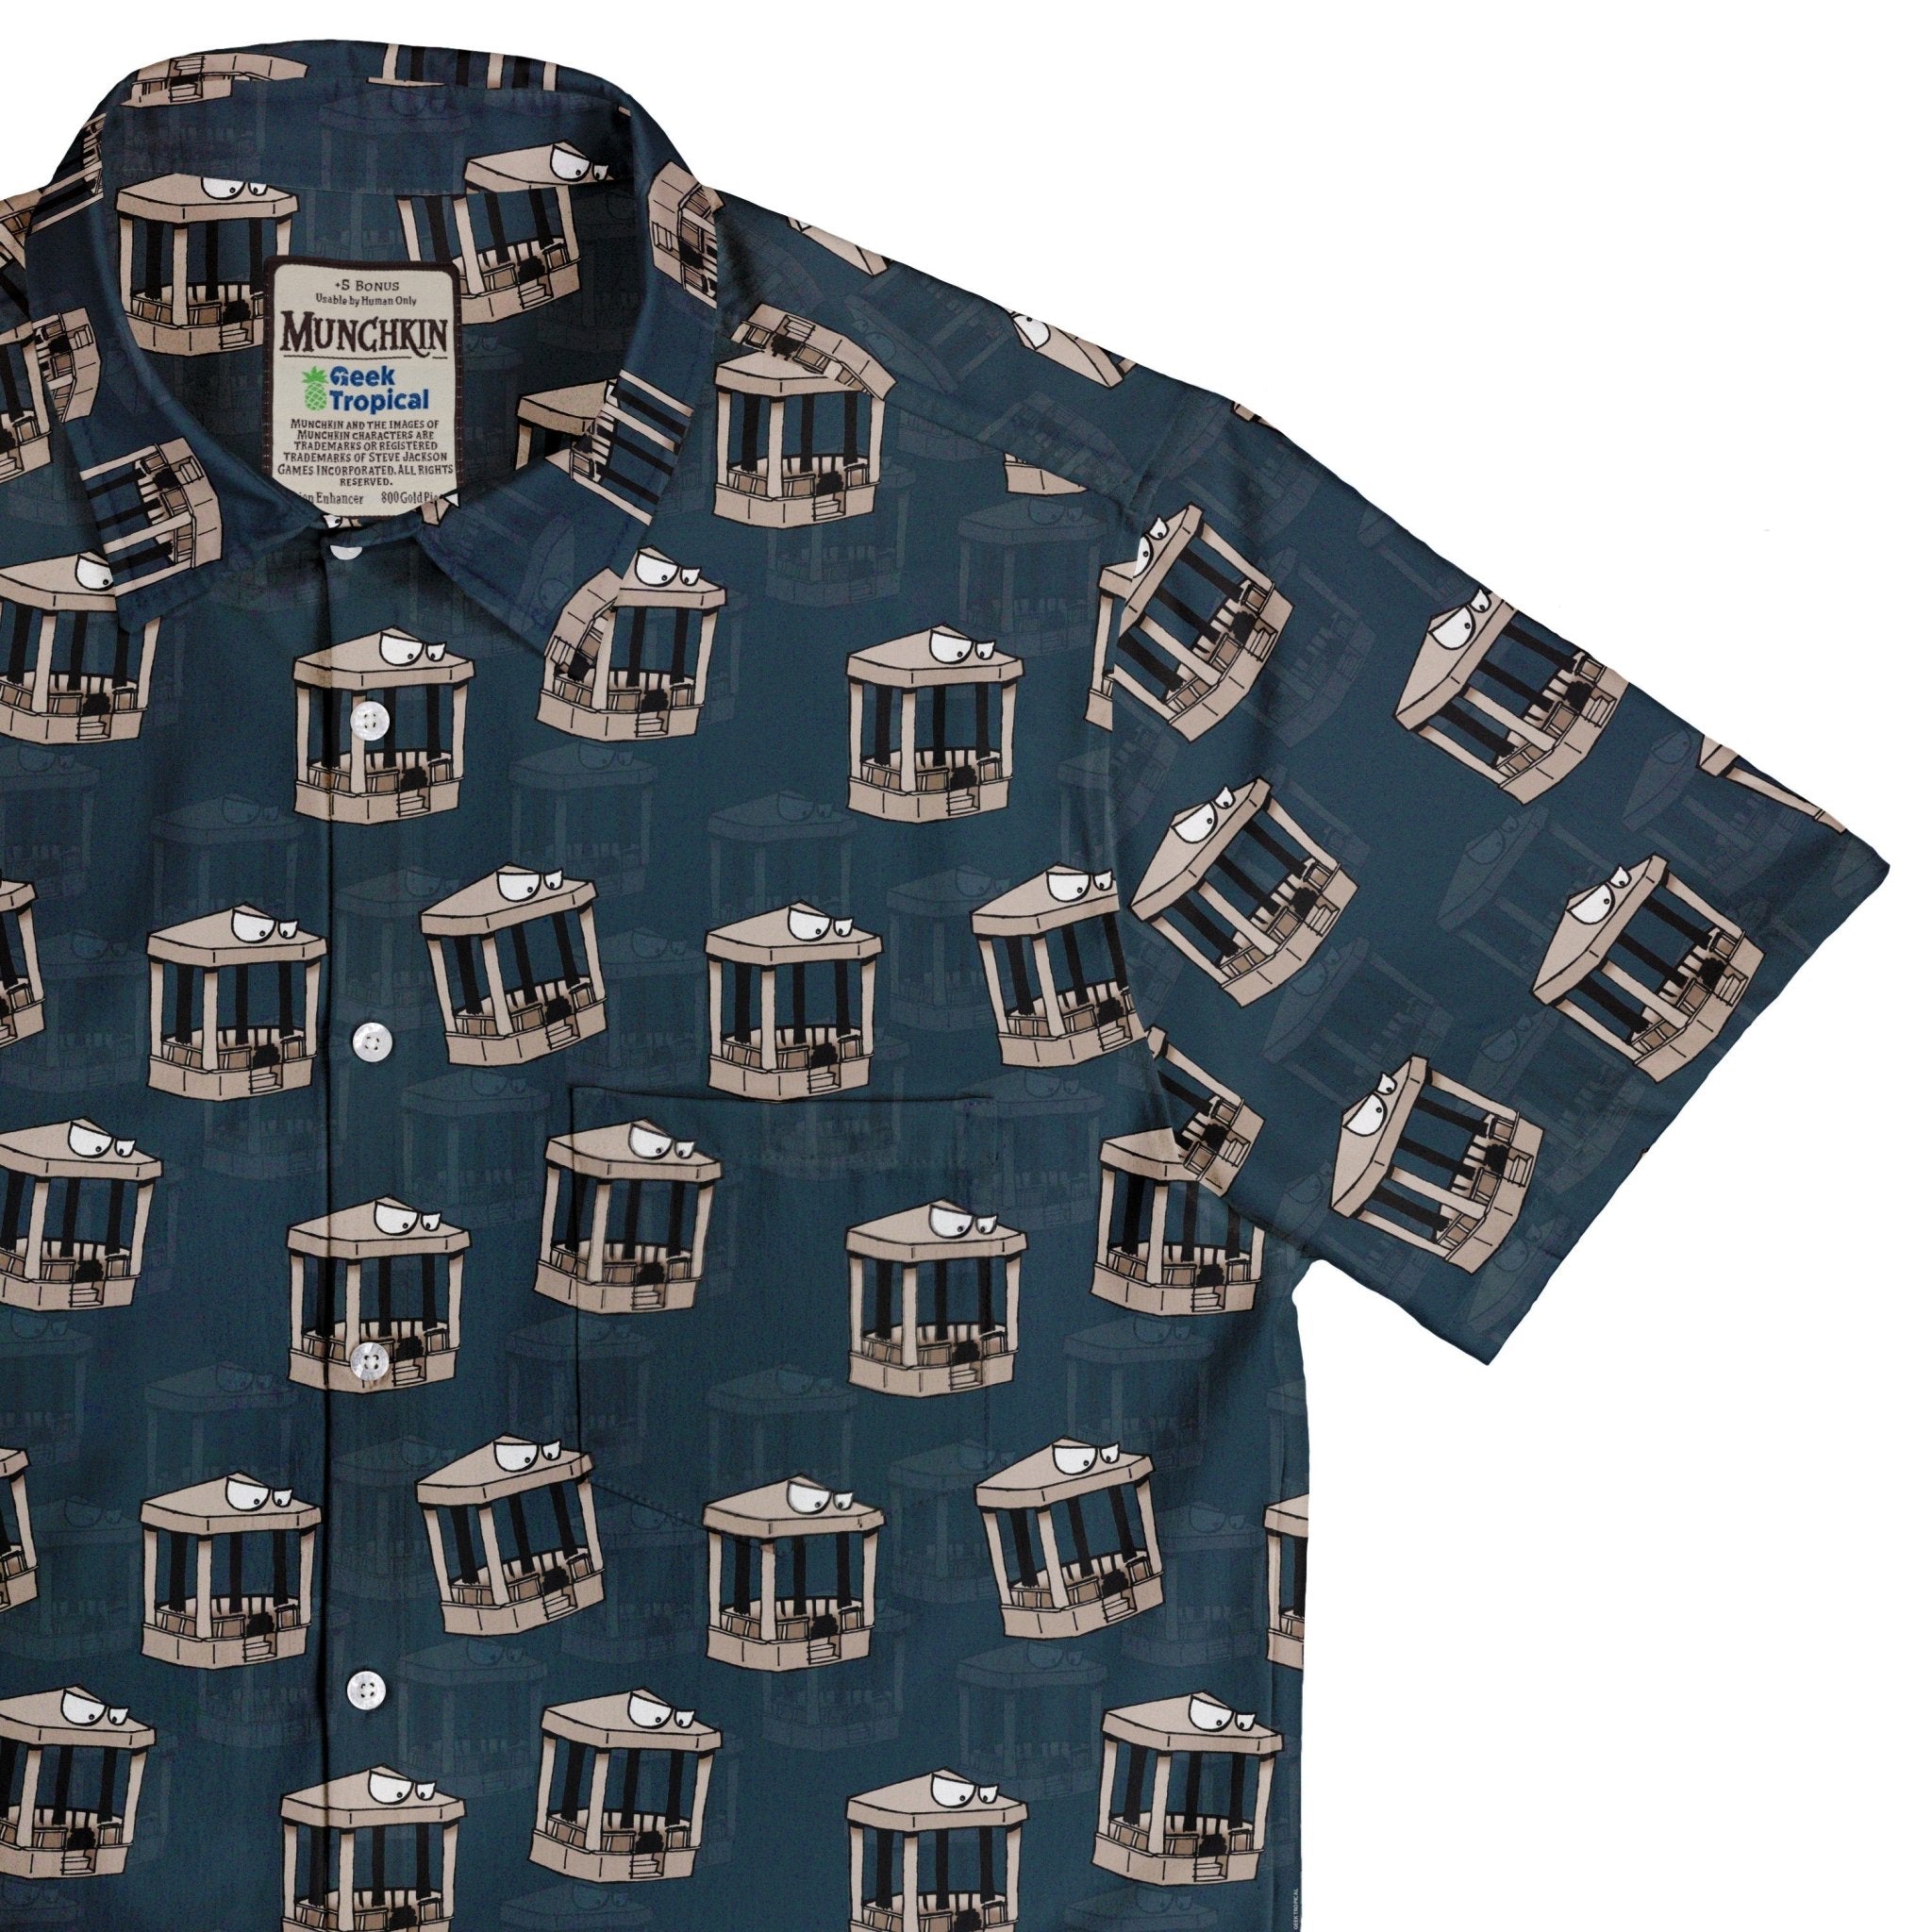 Munchkin Gazebos Button Up Shirt - board game print - Design by Dunking Toast - Munchkin print